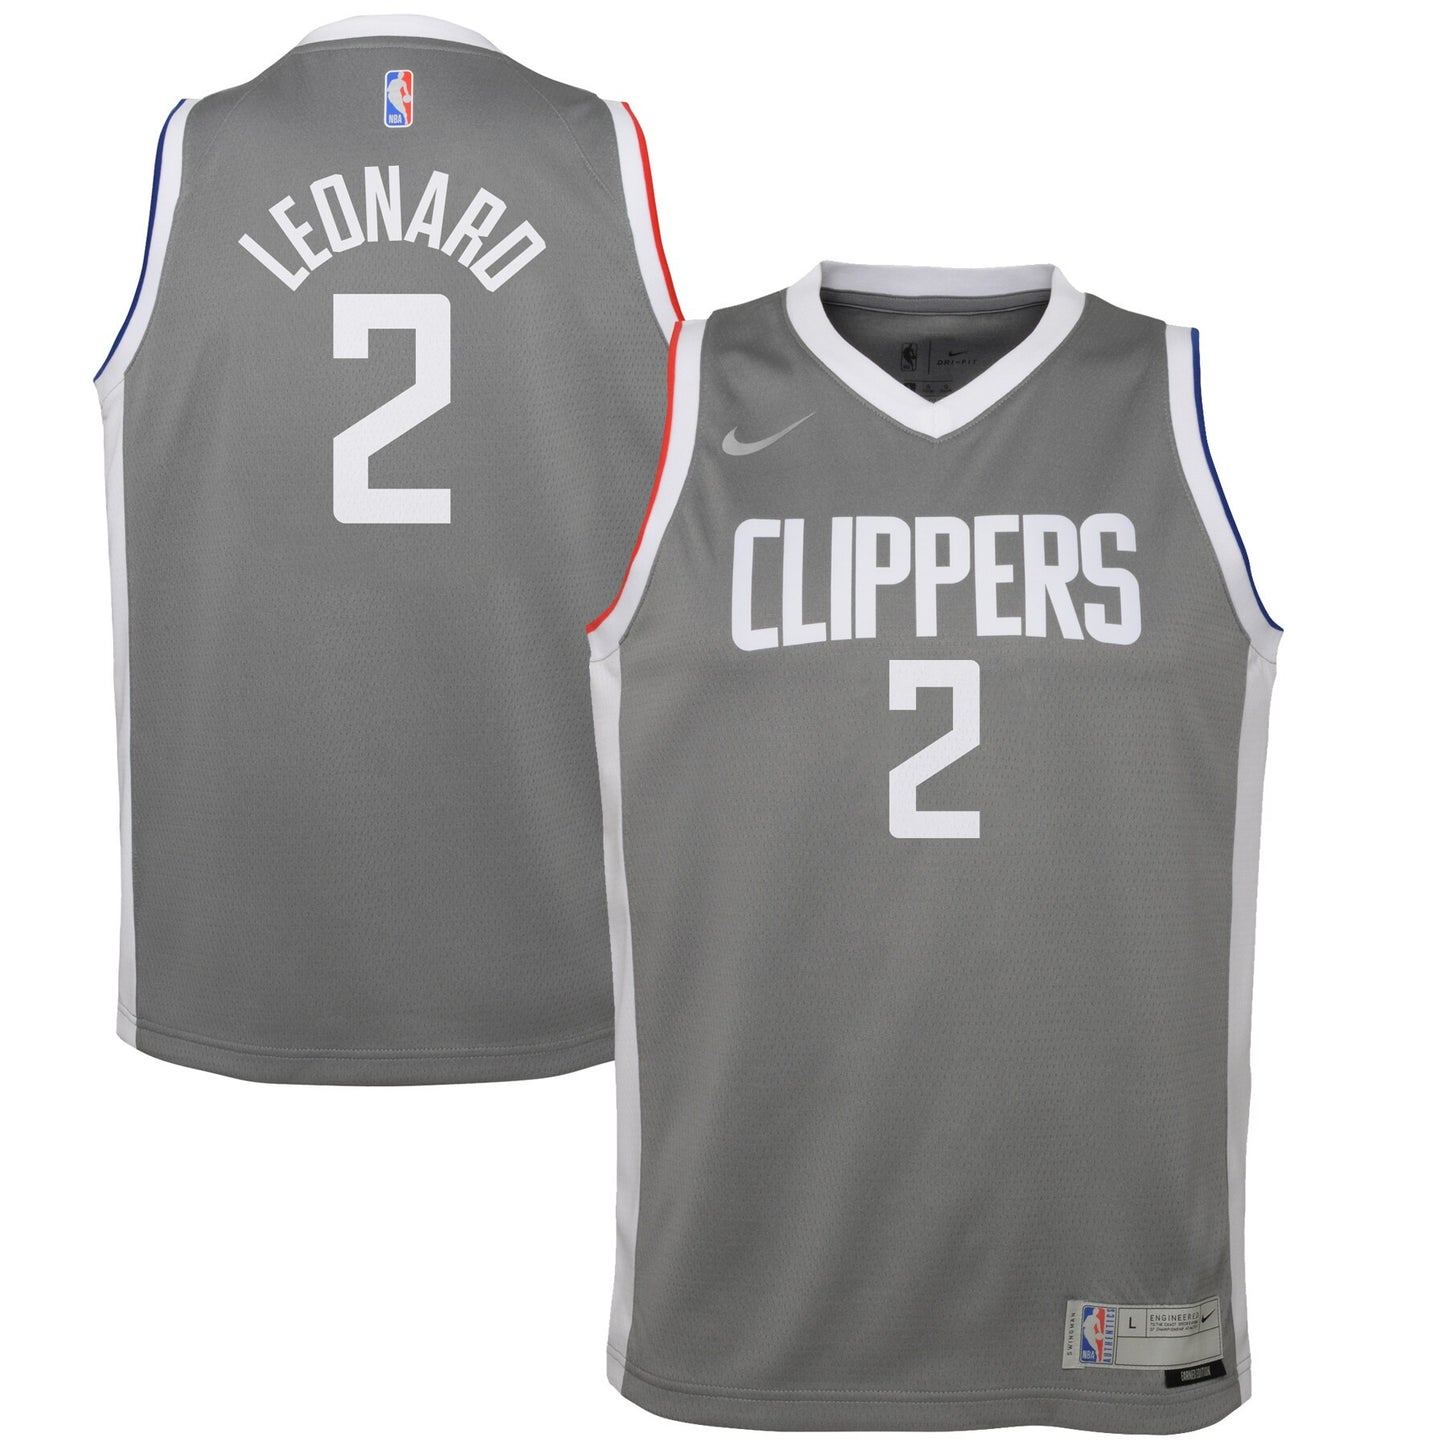 Kawhi Leonard LA Clippers Nike Youth 2020/21 Swingman Player Jersey Gray - Earned Edition